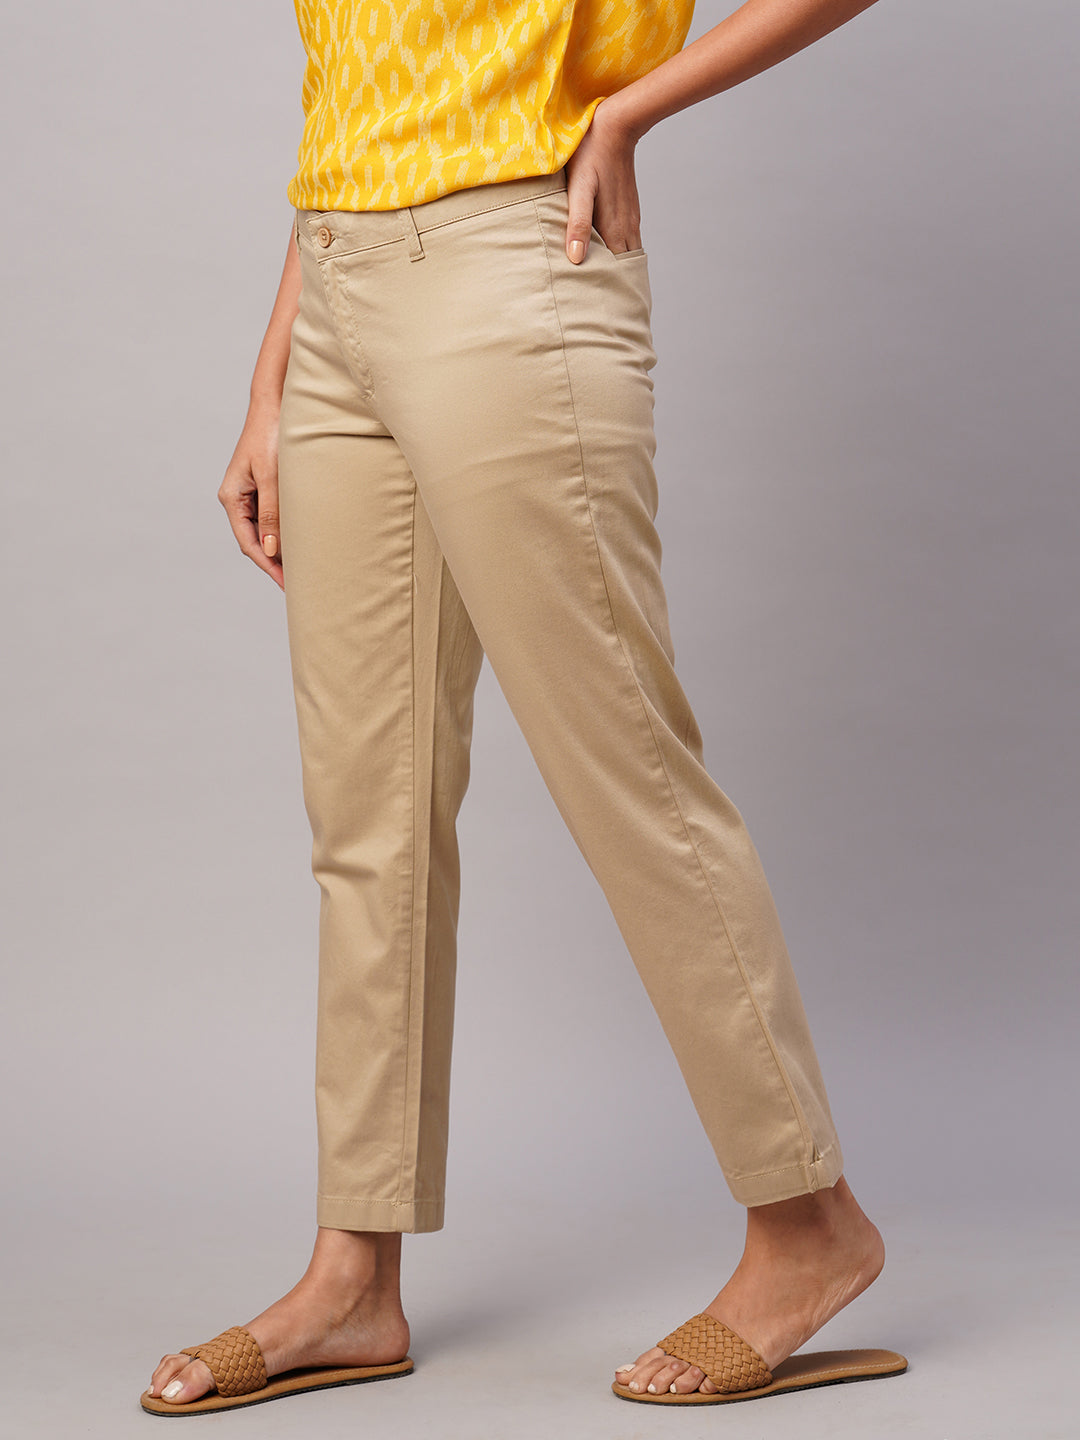 Pants for Women | Dress Pants, Trousers & Joggers | Aritzia US